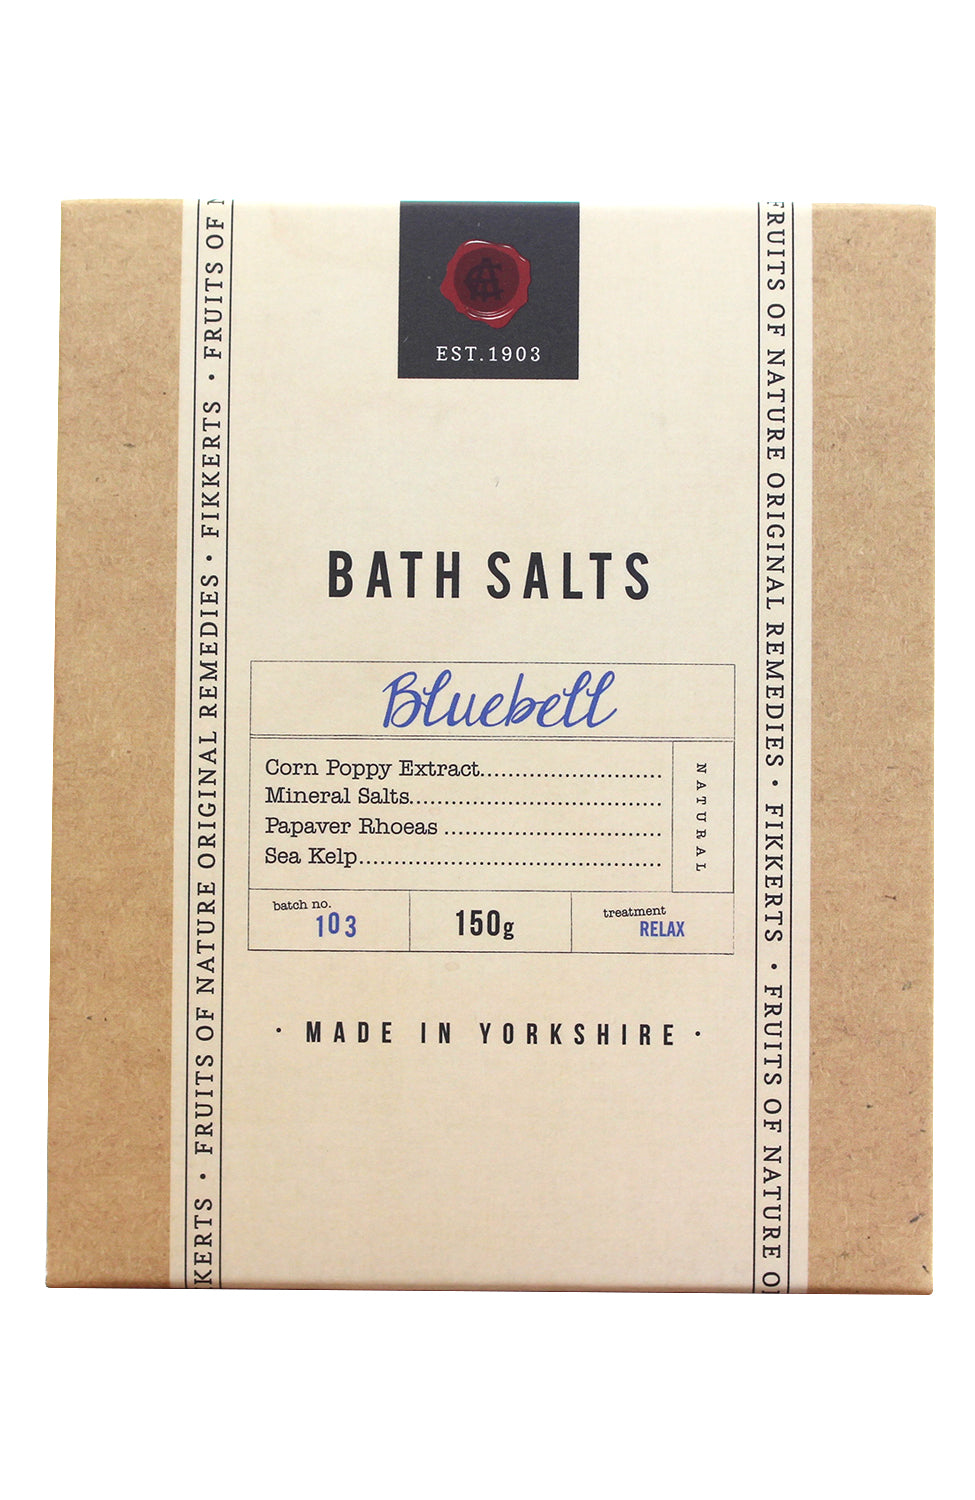 Bluebell bath salts